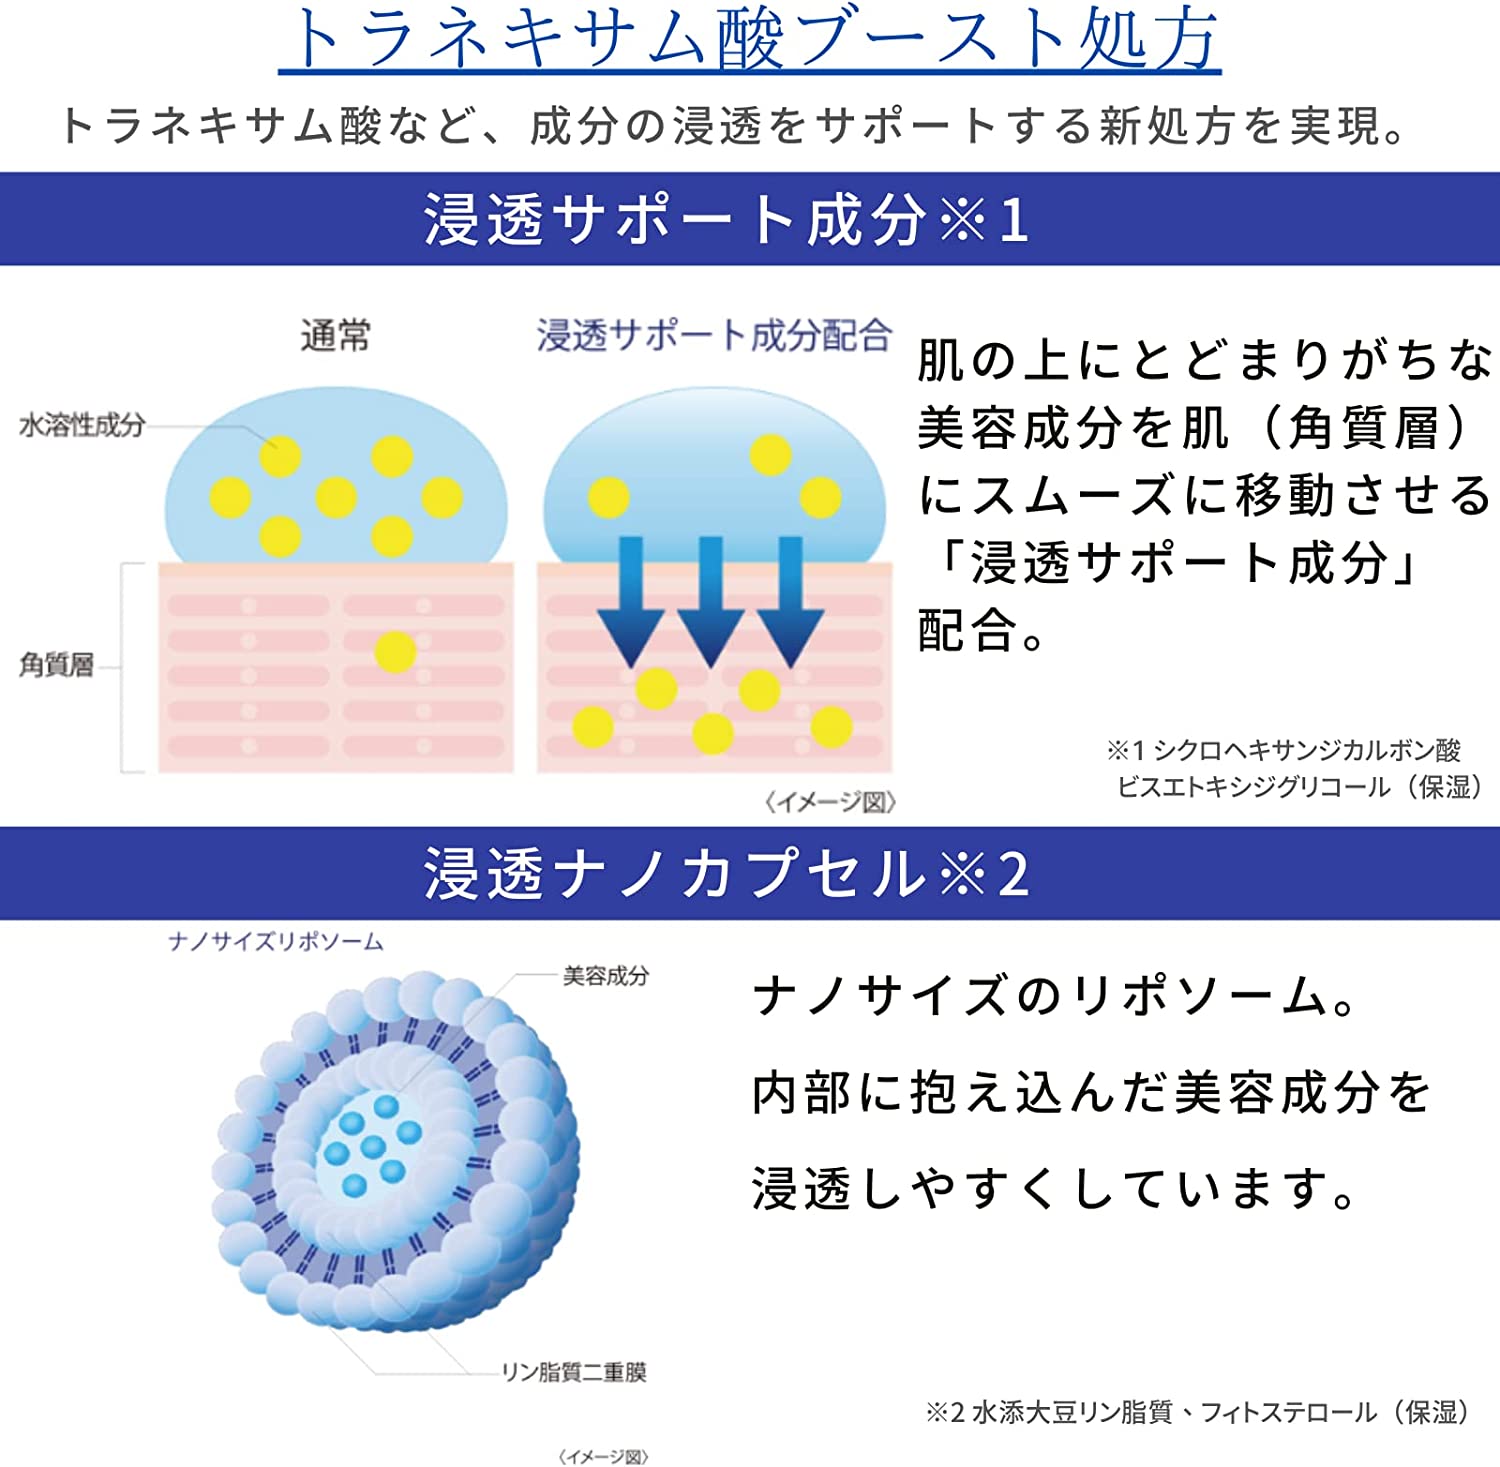 Daiichi Sankyo Healthcare Transino Medicated Melano Signal Essence 30g/50g